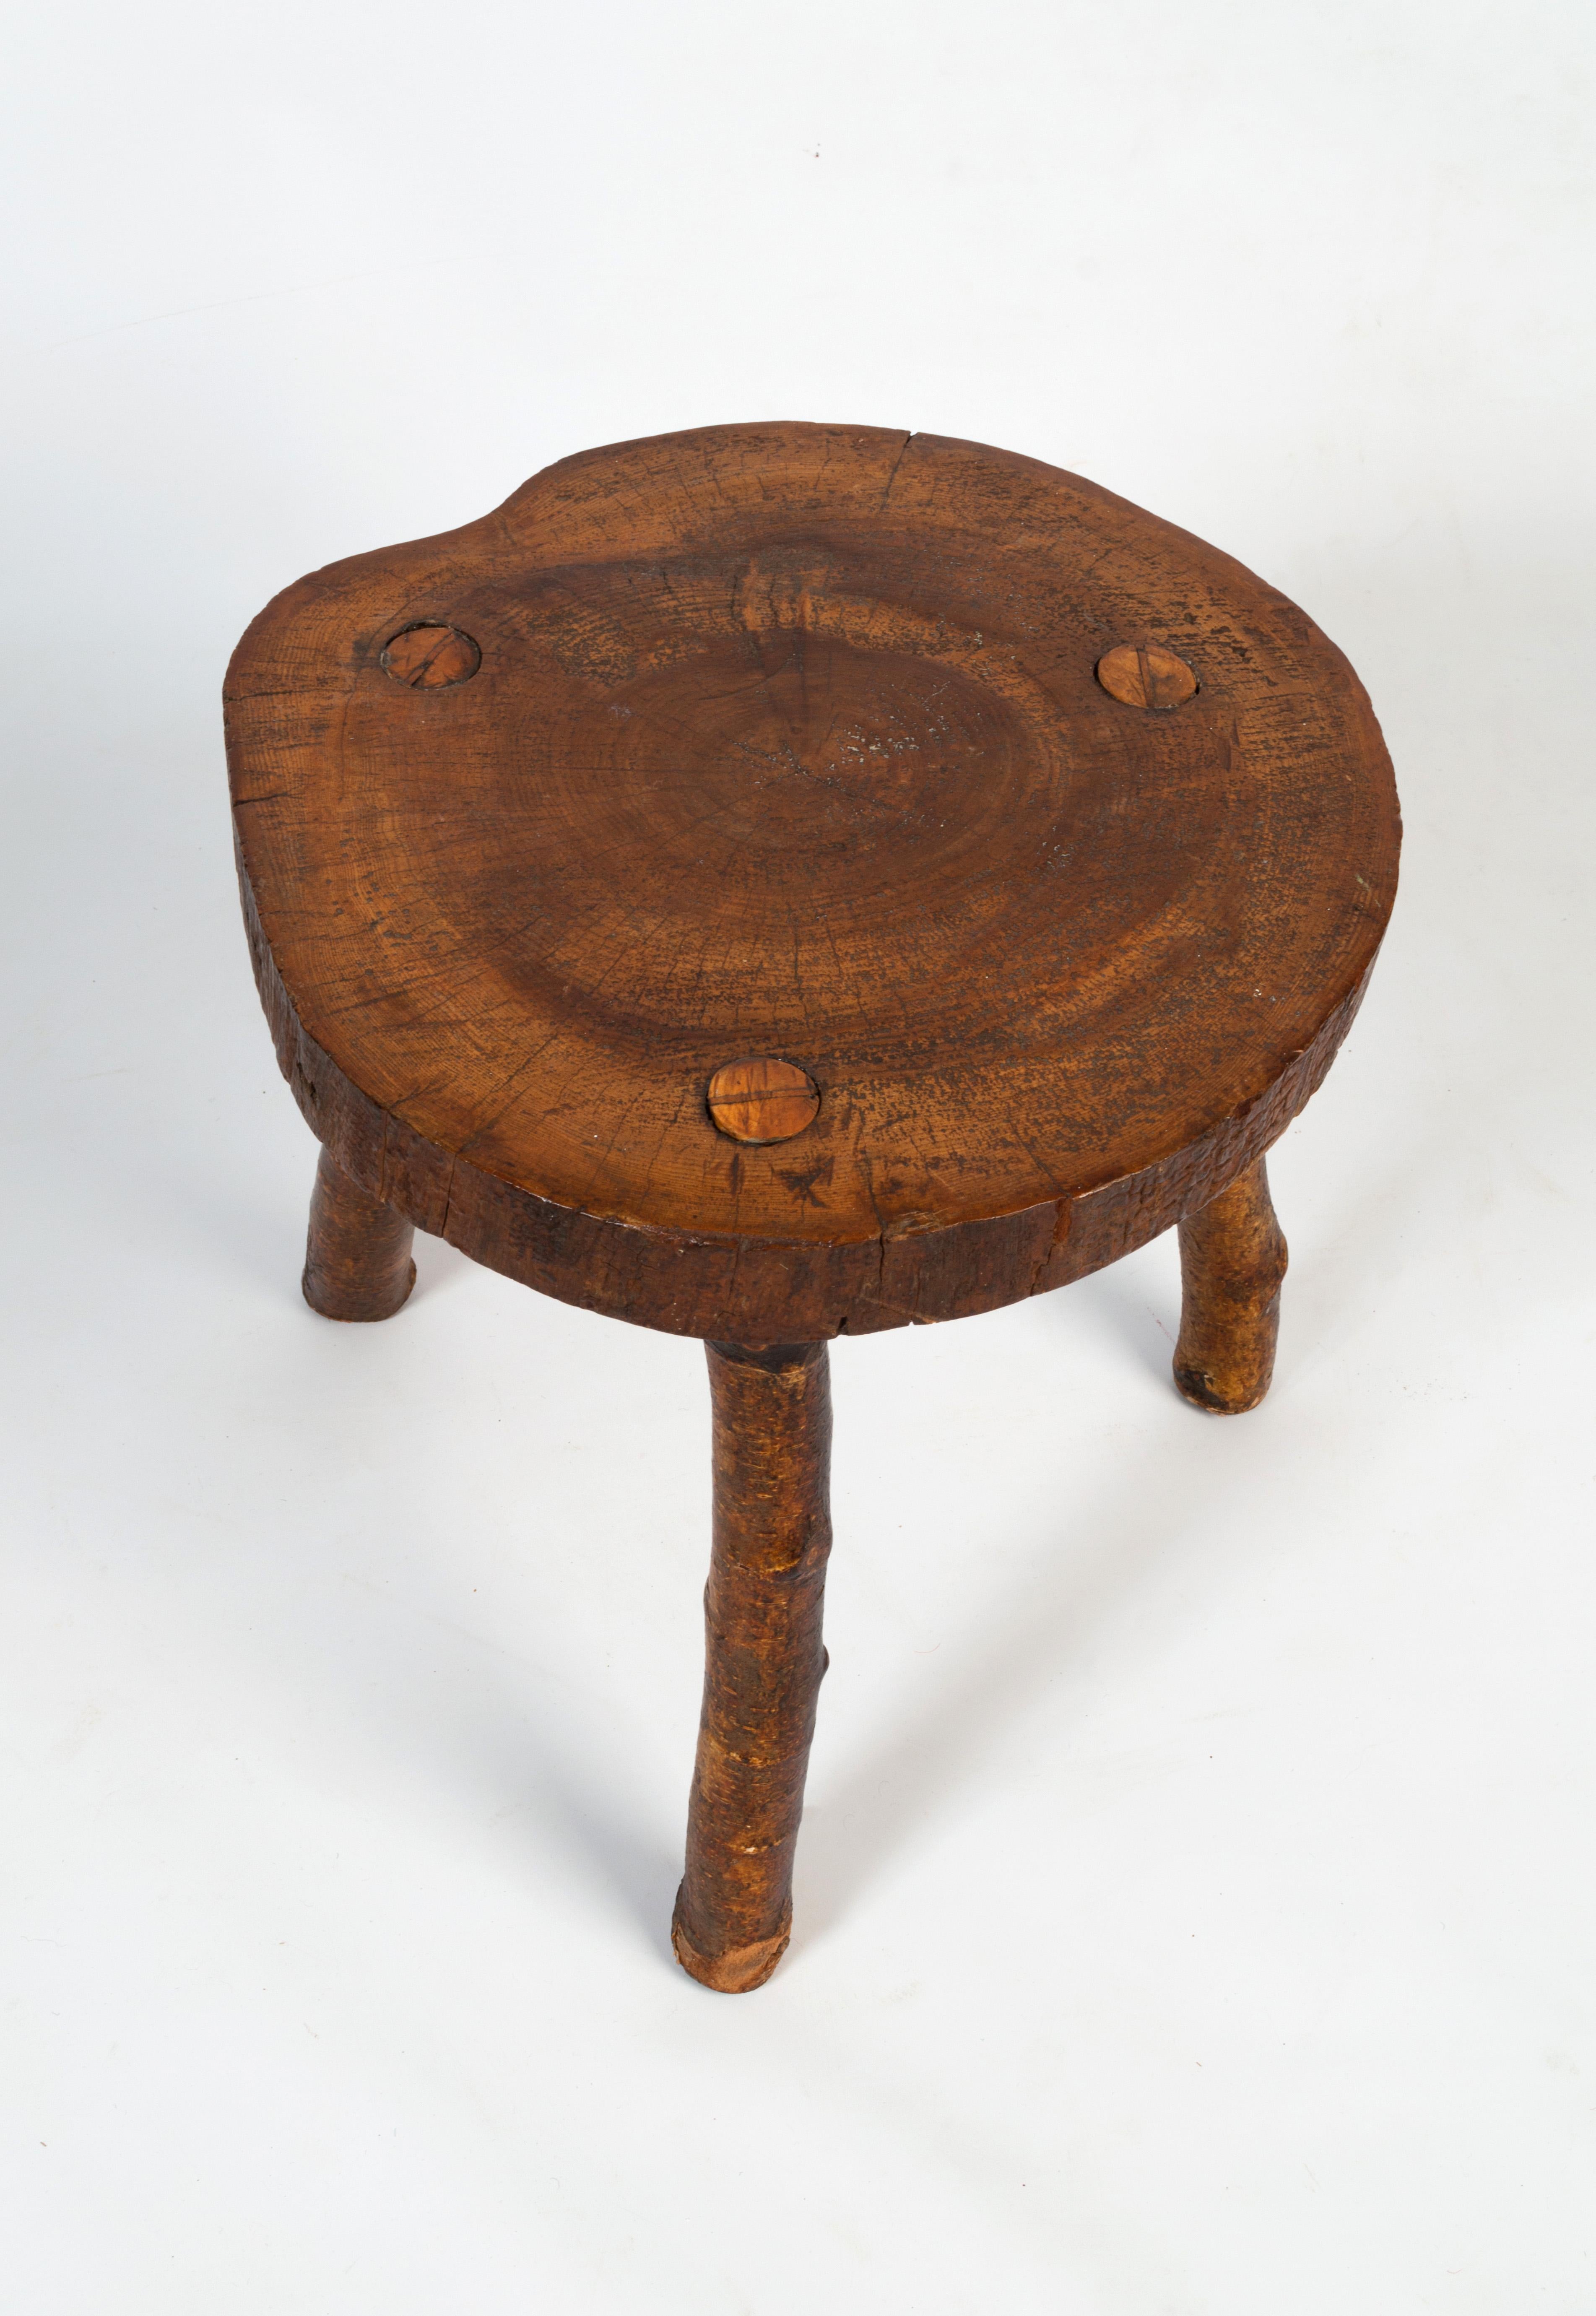 Folk Art Antique English 19th Century Vernacular Cricket Table Side Table Stool For Sale